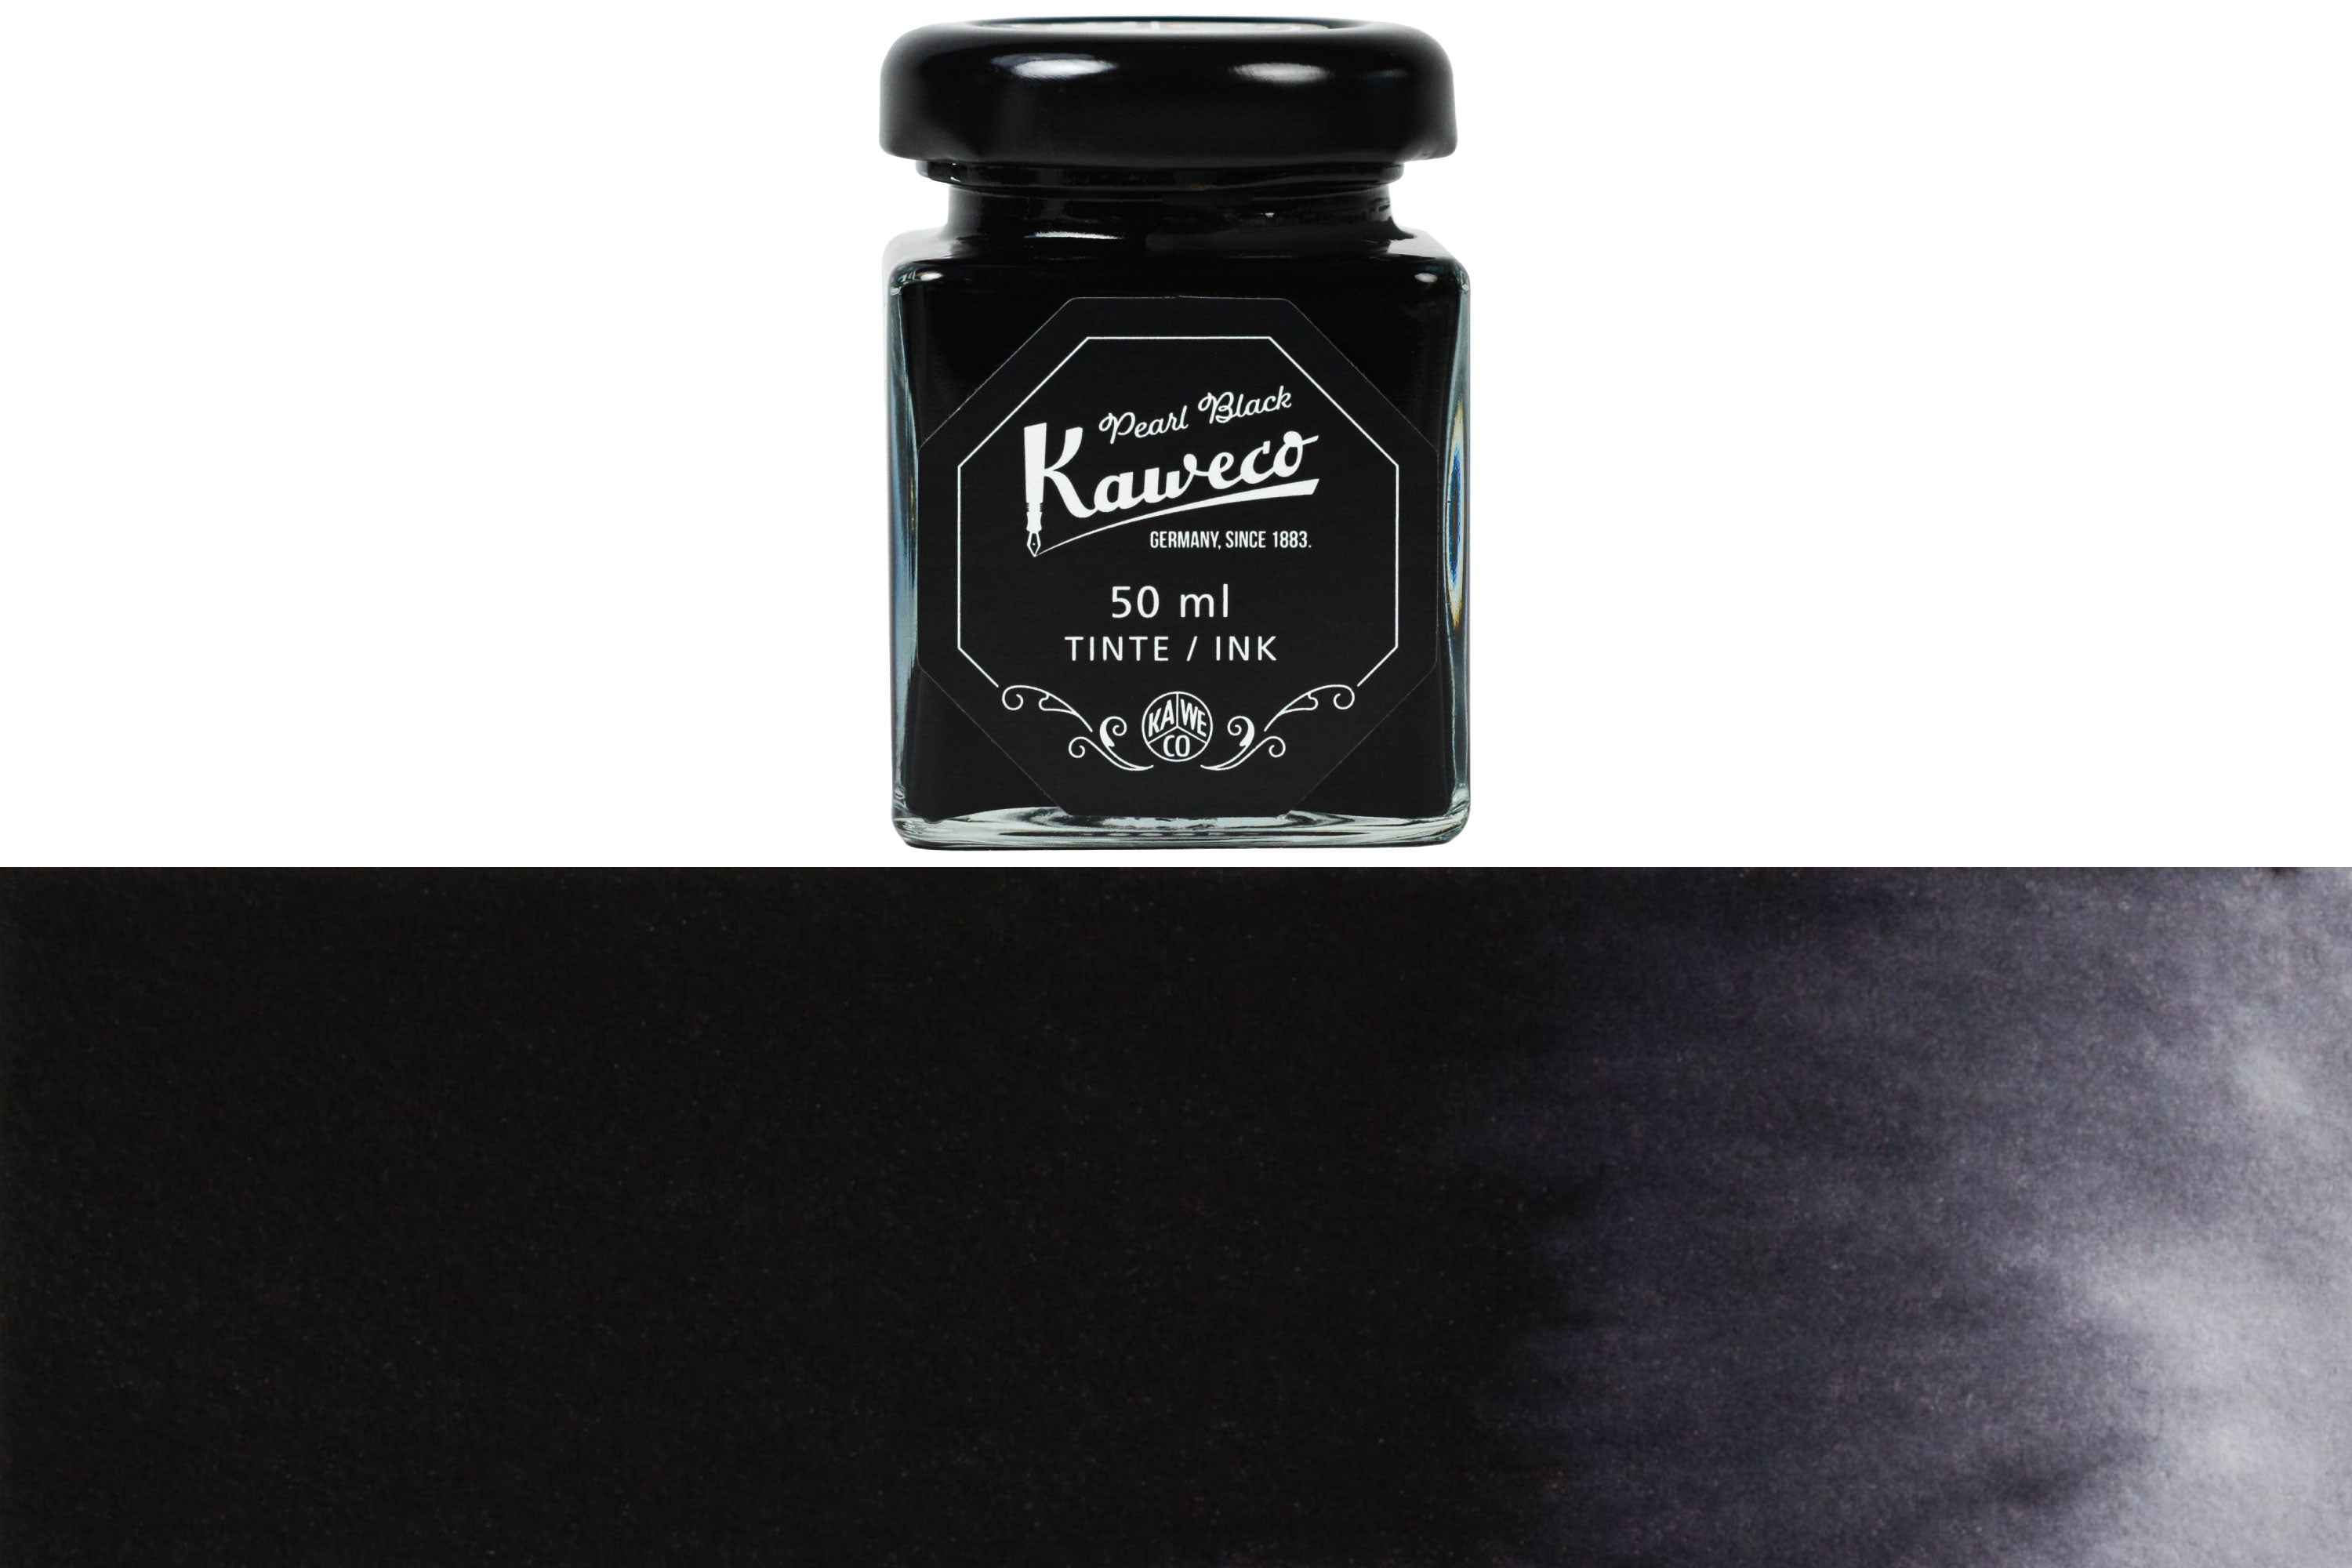 The Black Pearl's Bottle Koozie — The BLACK PEARL